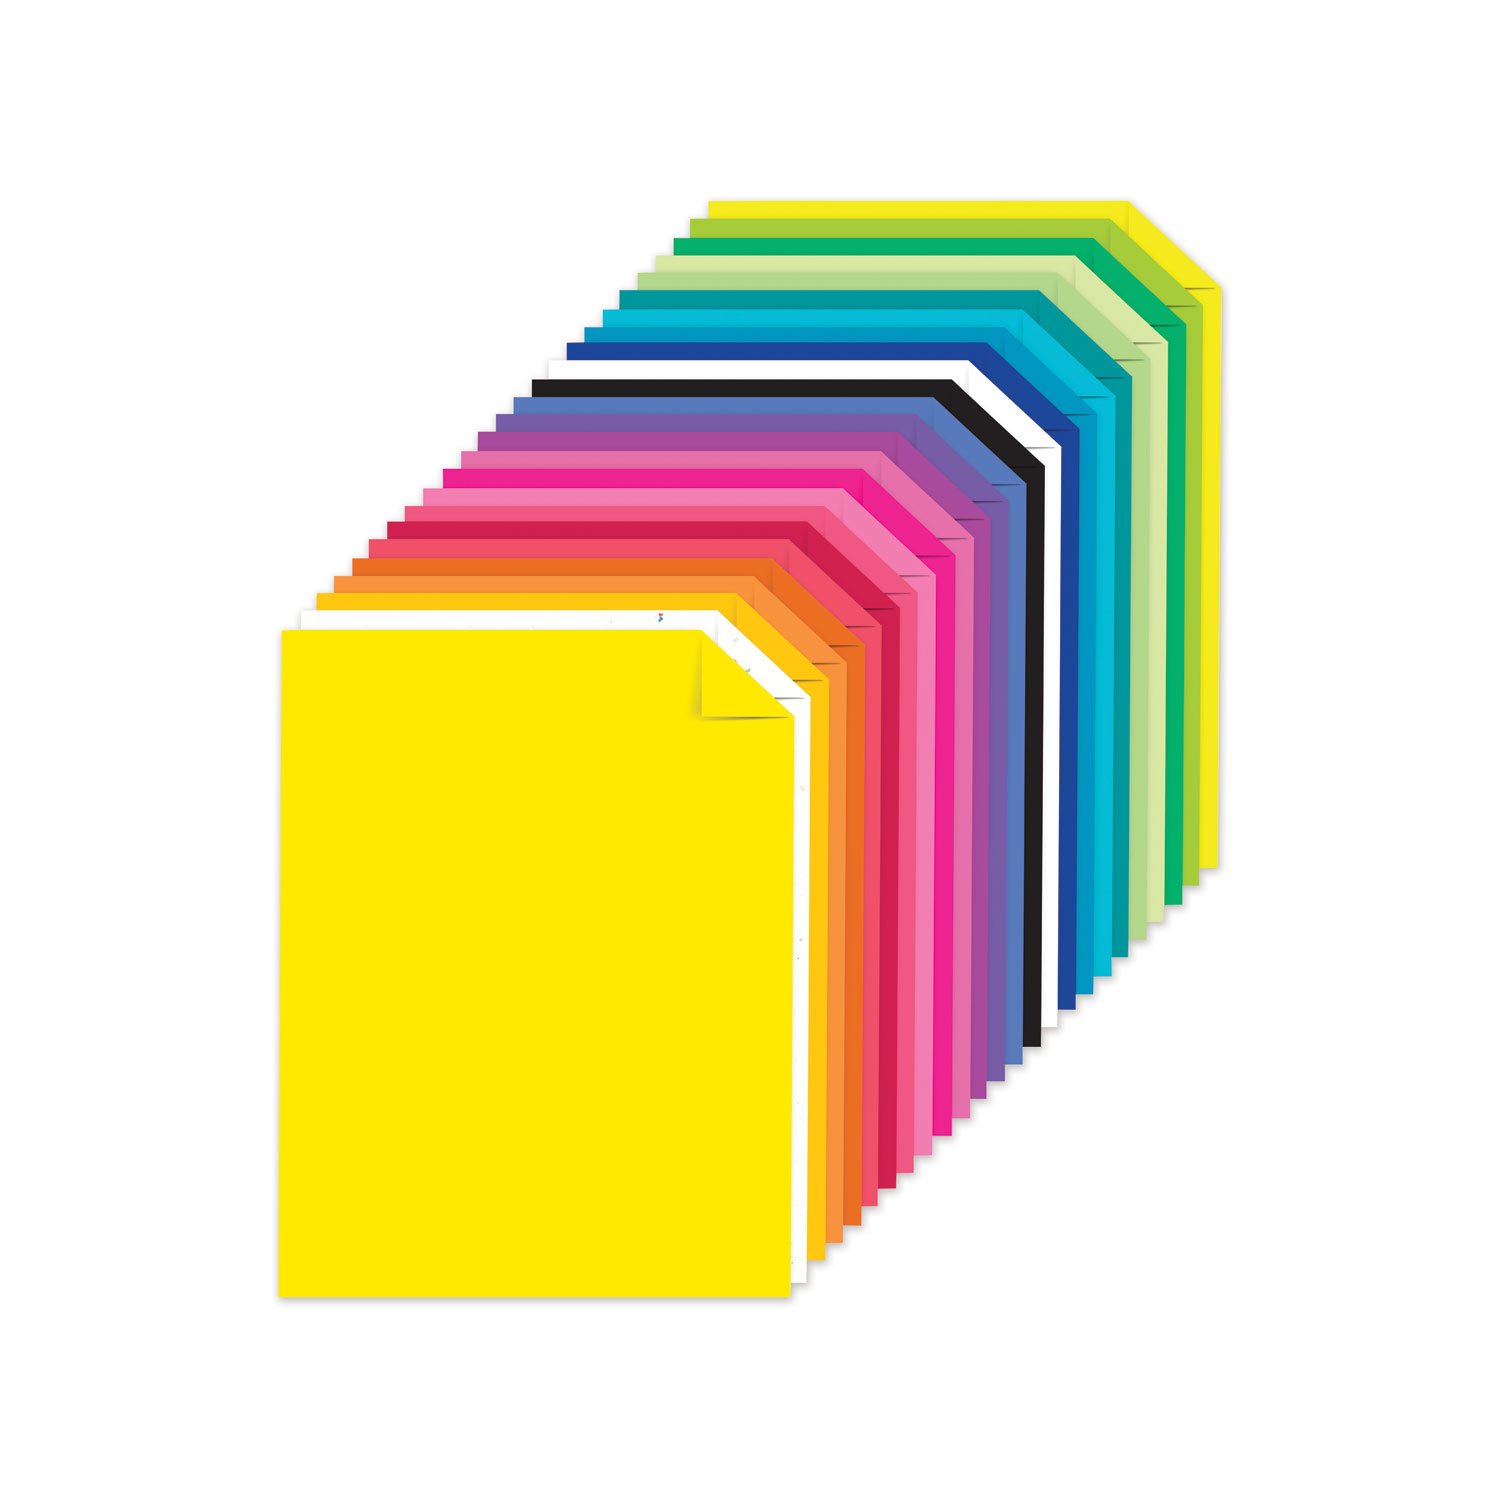 Astrobrights Color Cardstock, Smooth, 65lb, 8 1/2 x 11, Plasma Pink, 250  Sheets